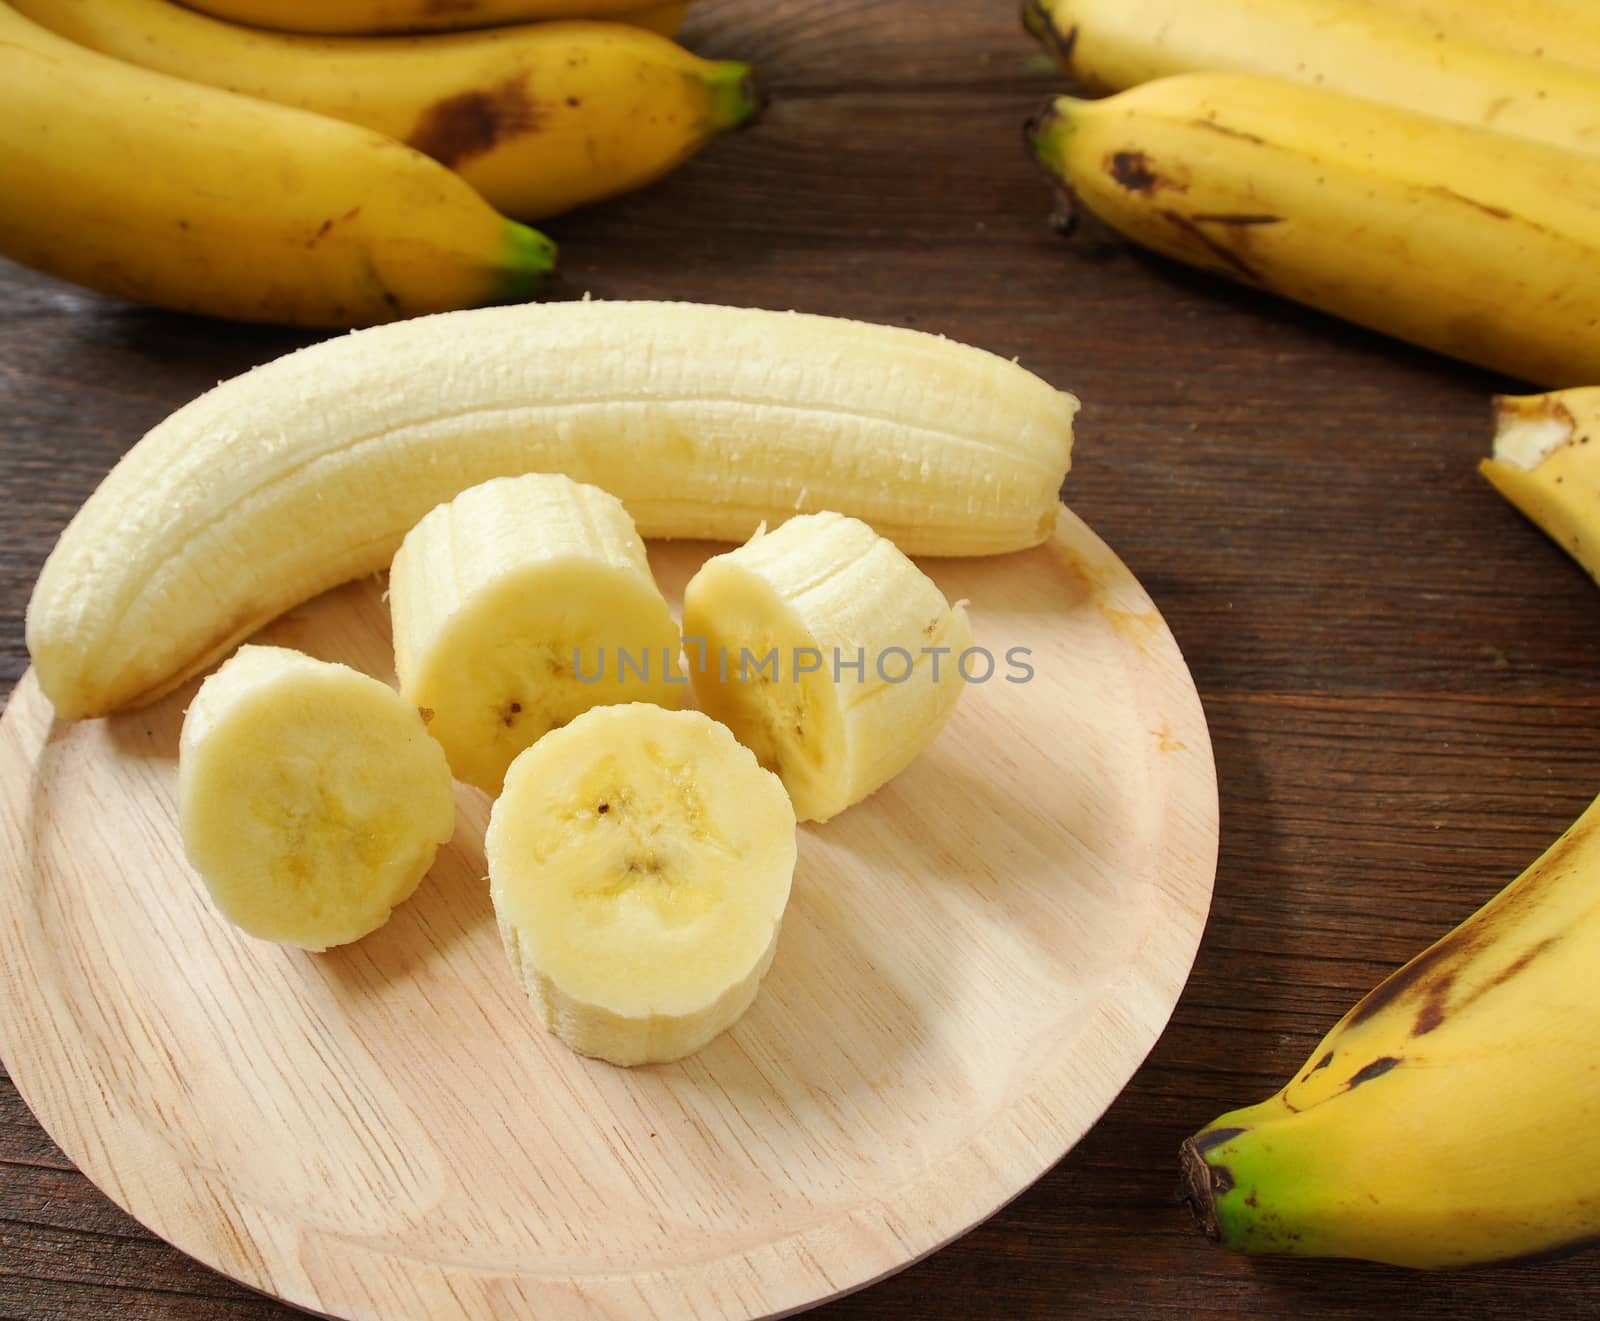 Bananas and banana slices on a plate of wood.